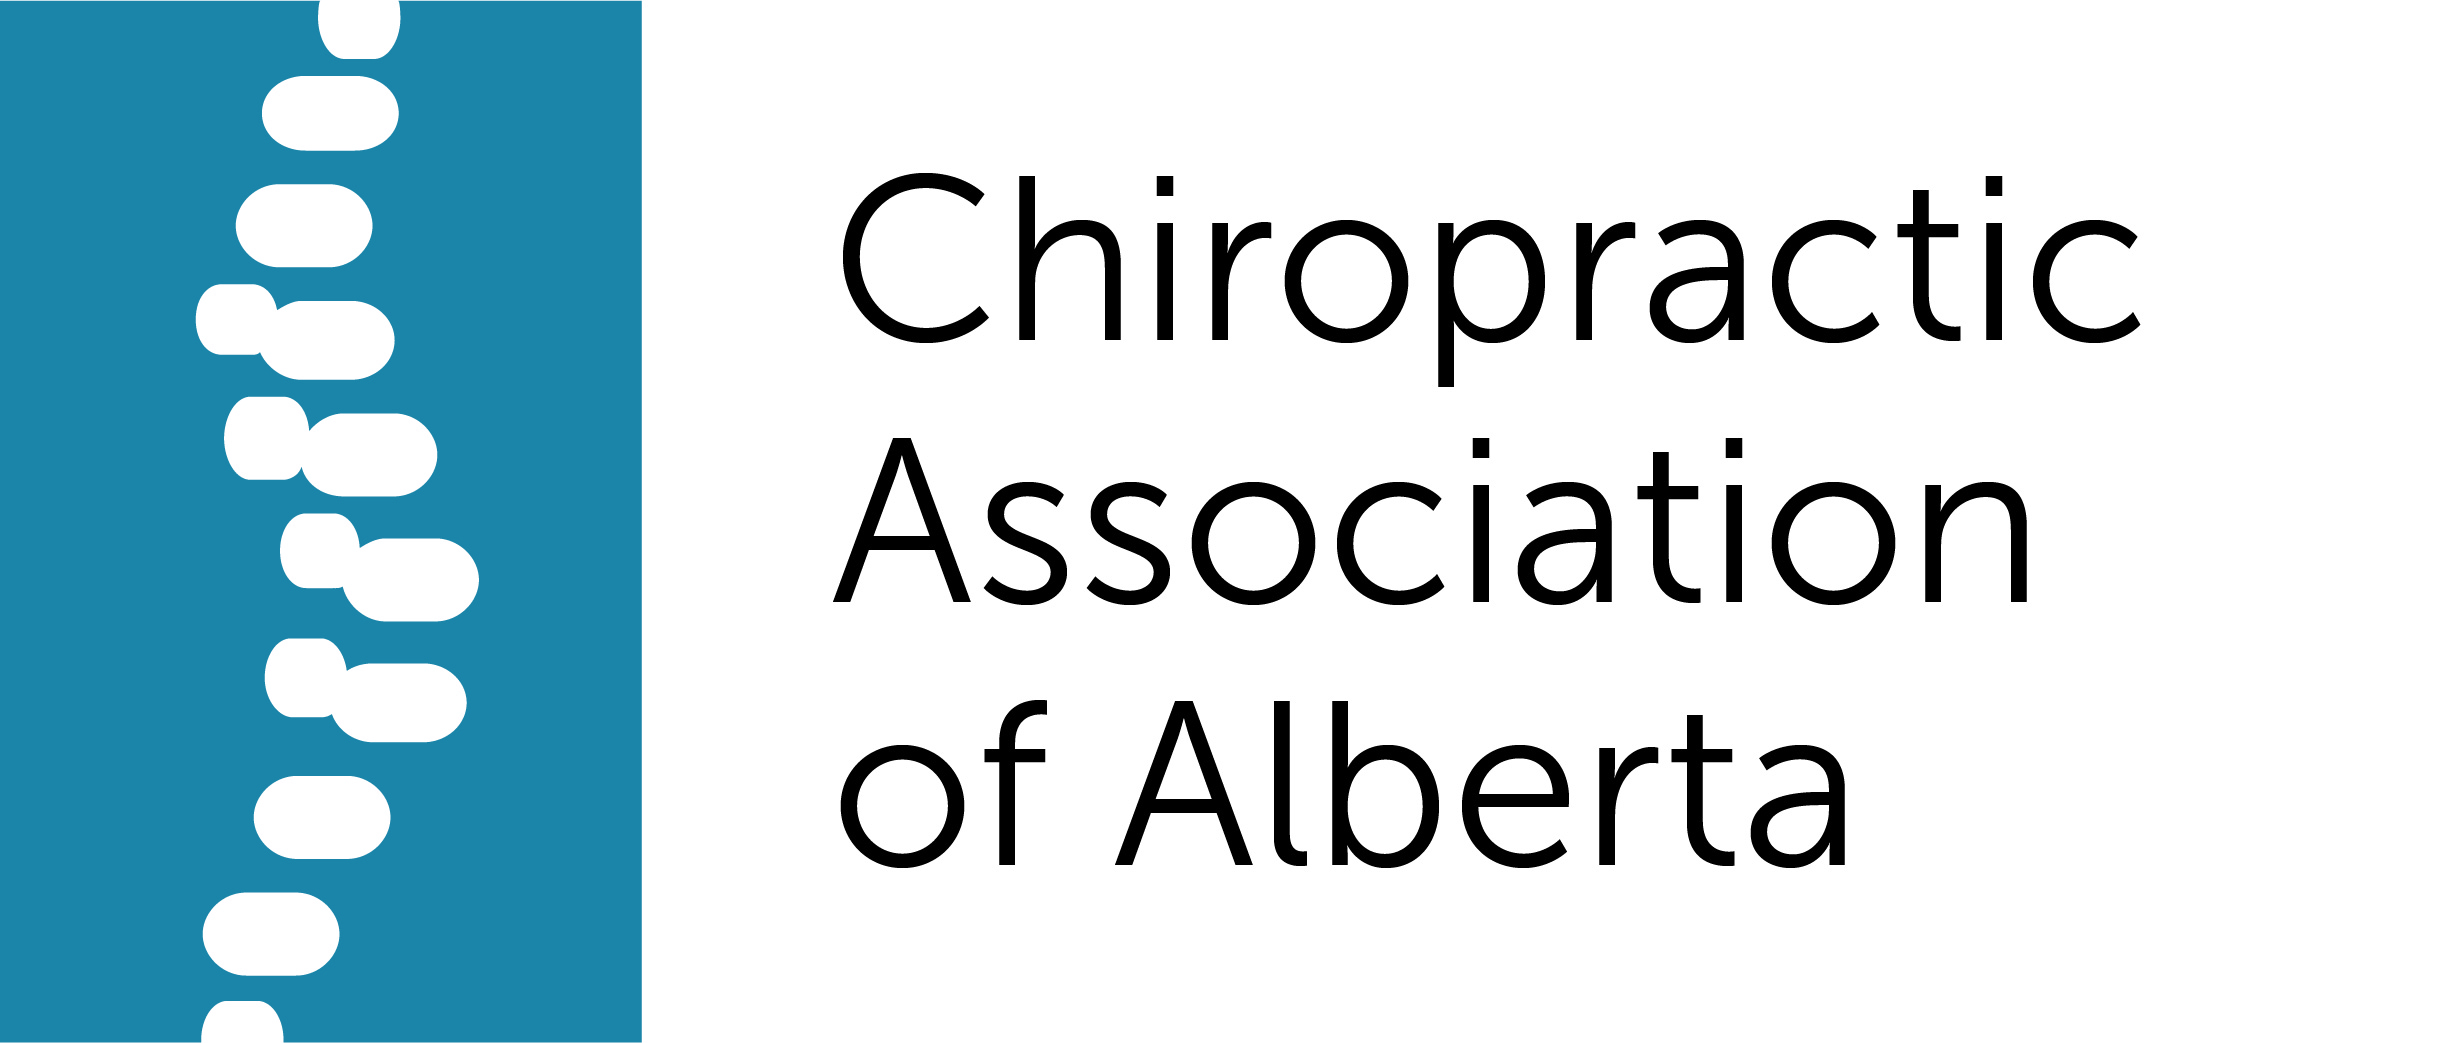 Chiropractic Association of Alberta